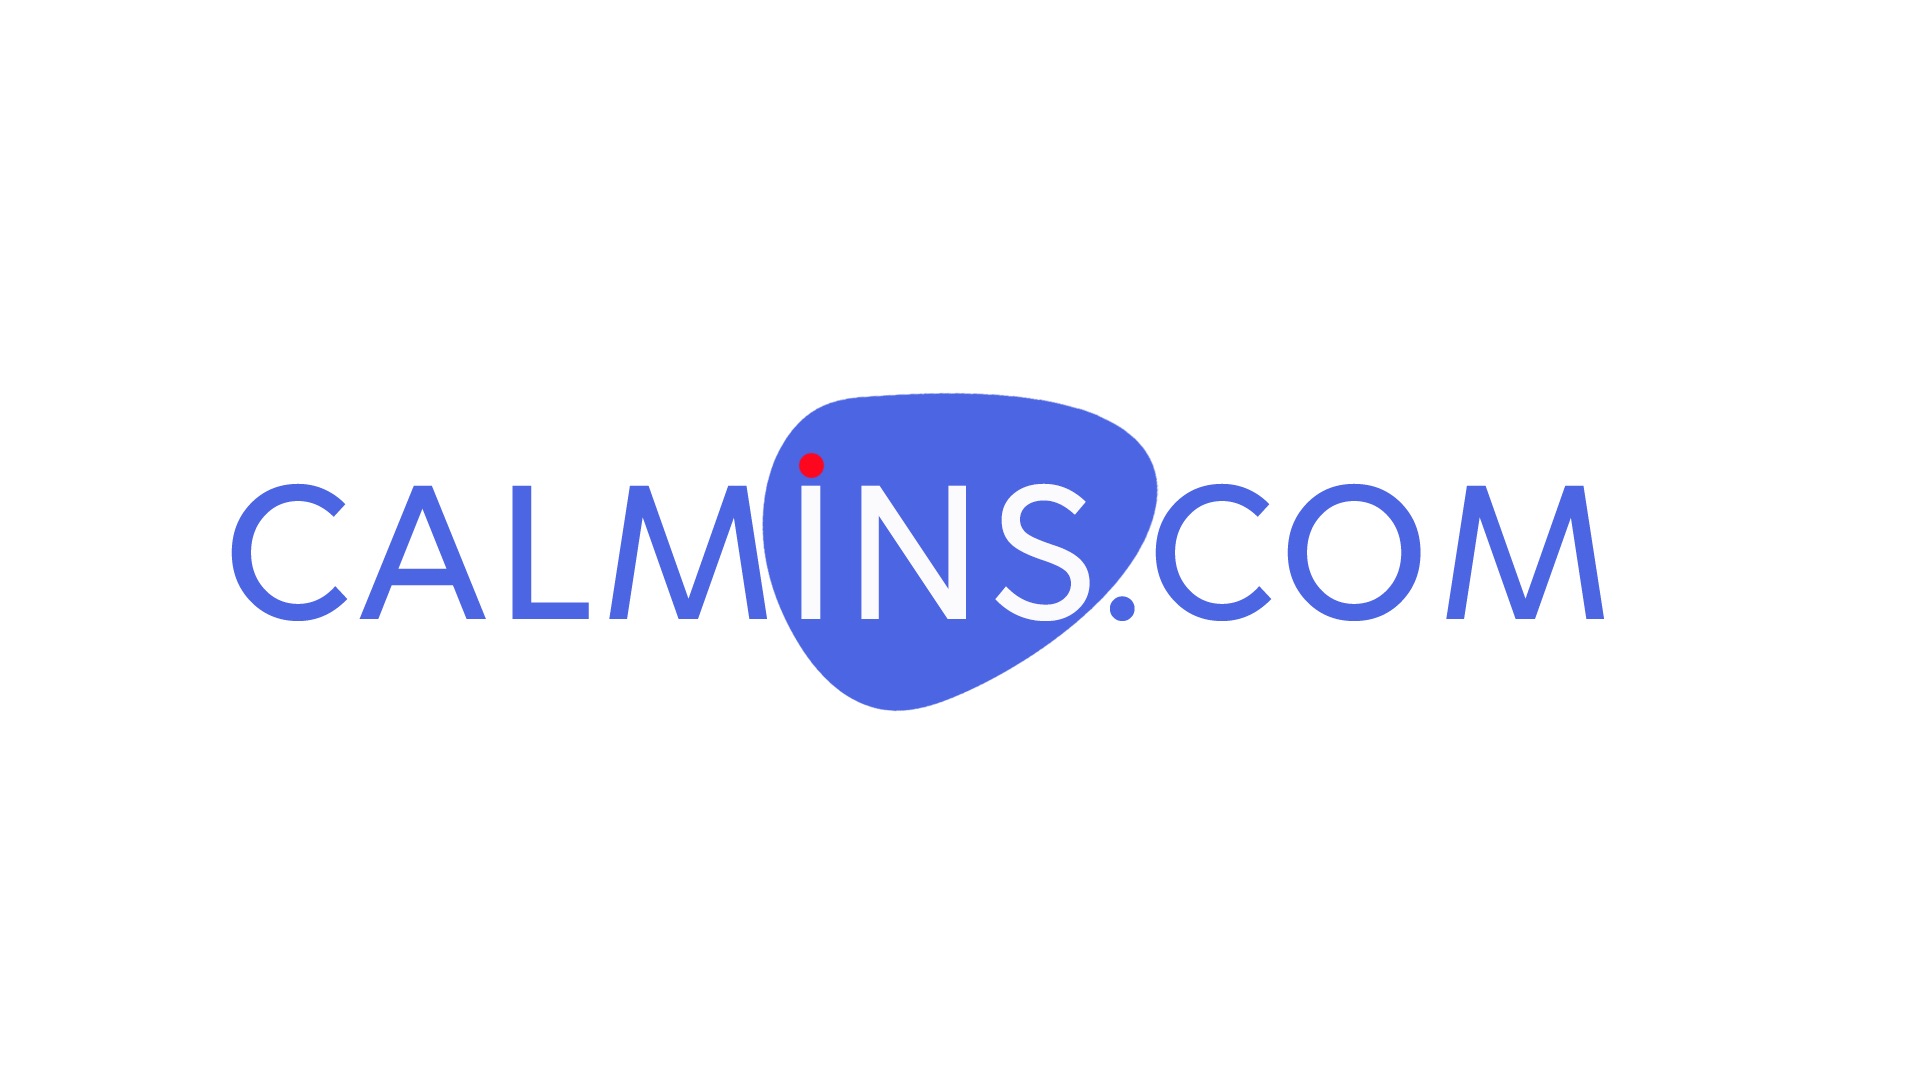 We have registered Calmins trademark!